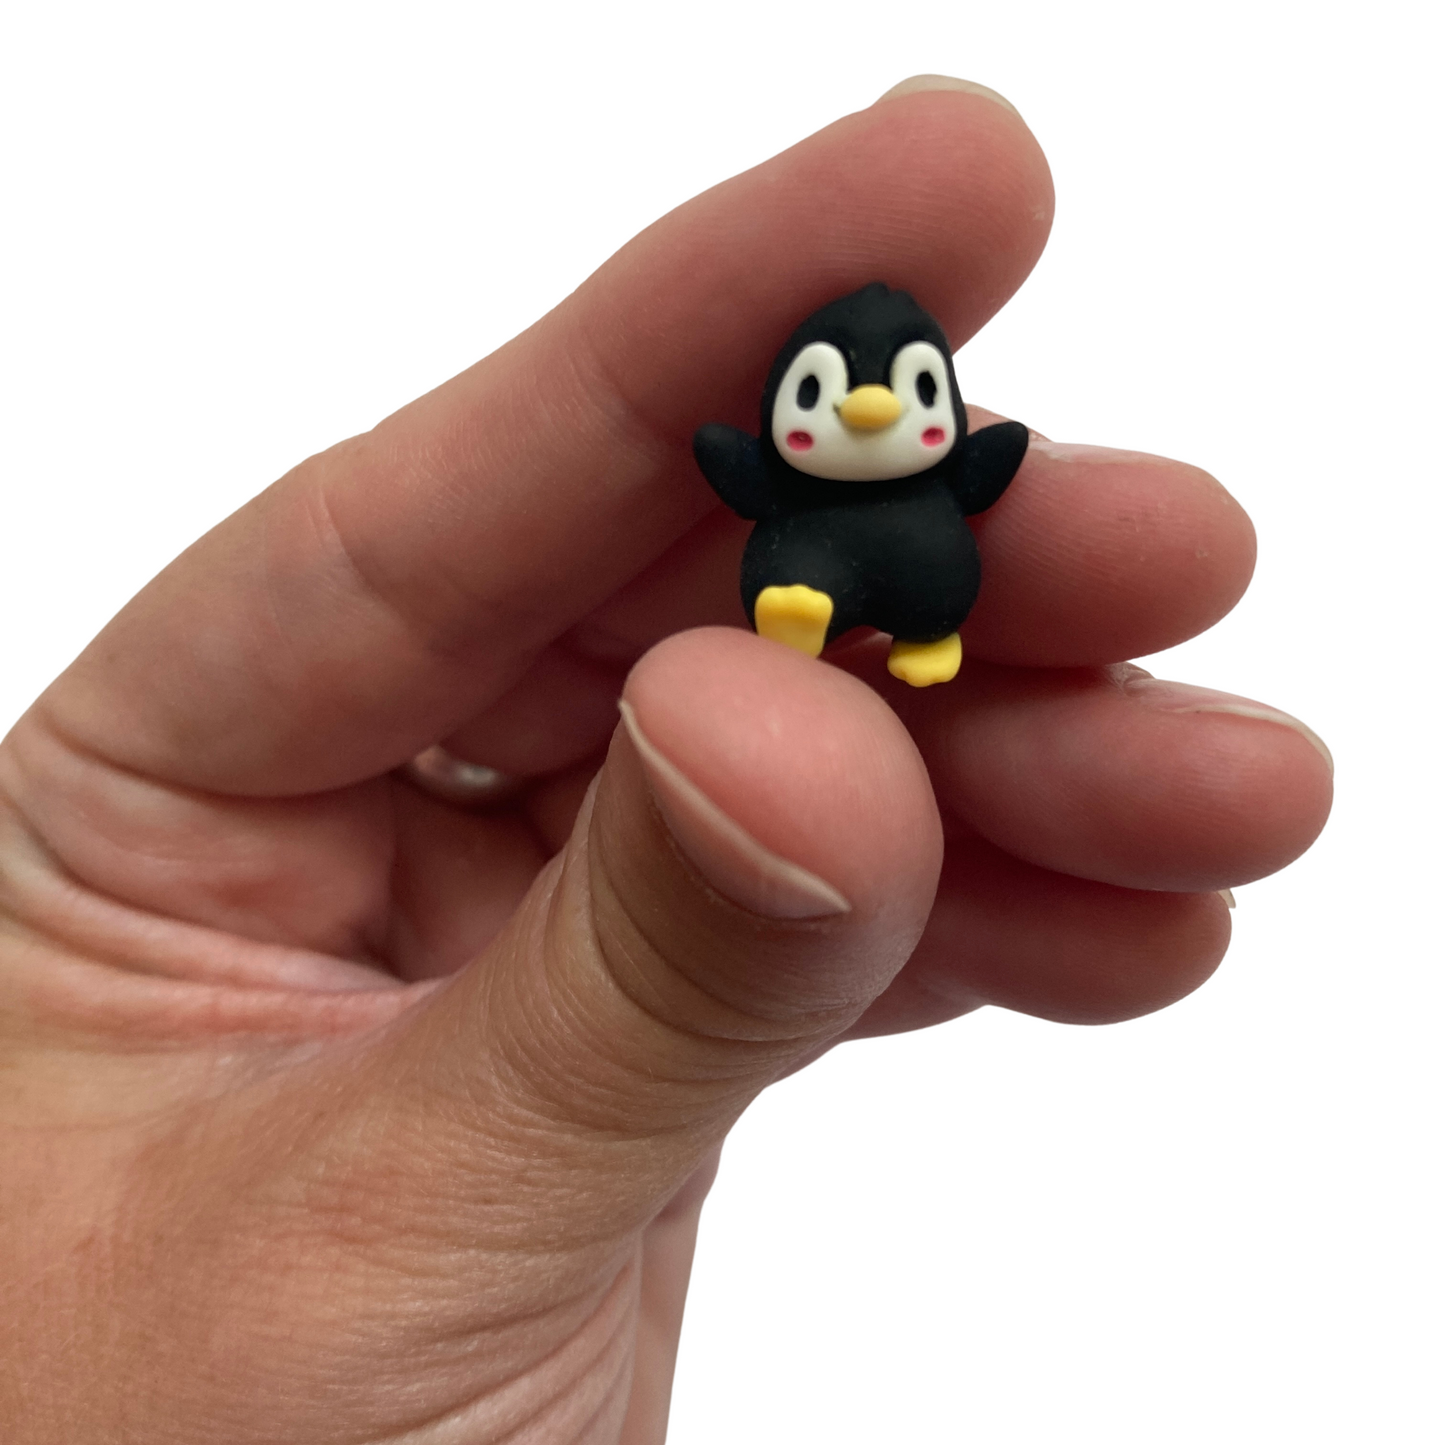 Penguin Magnets